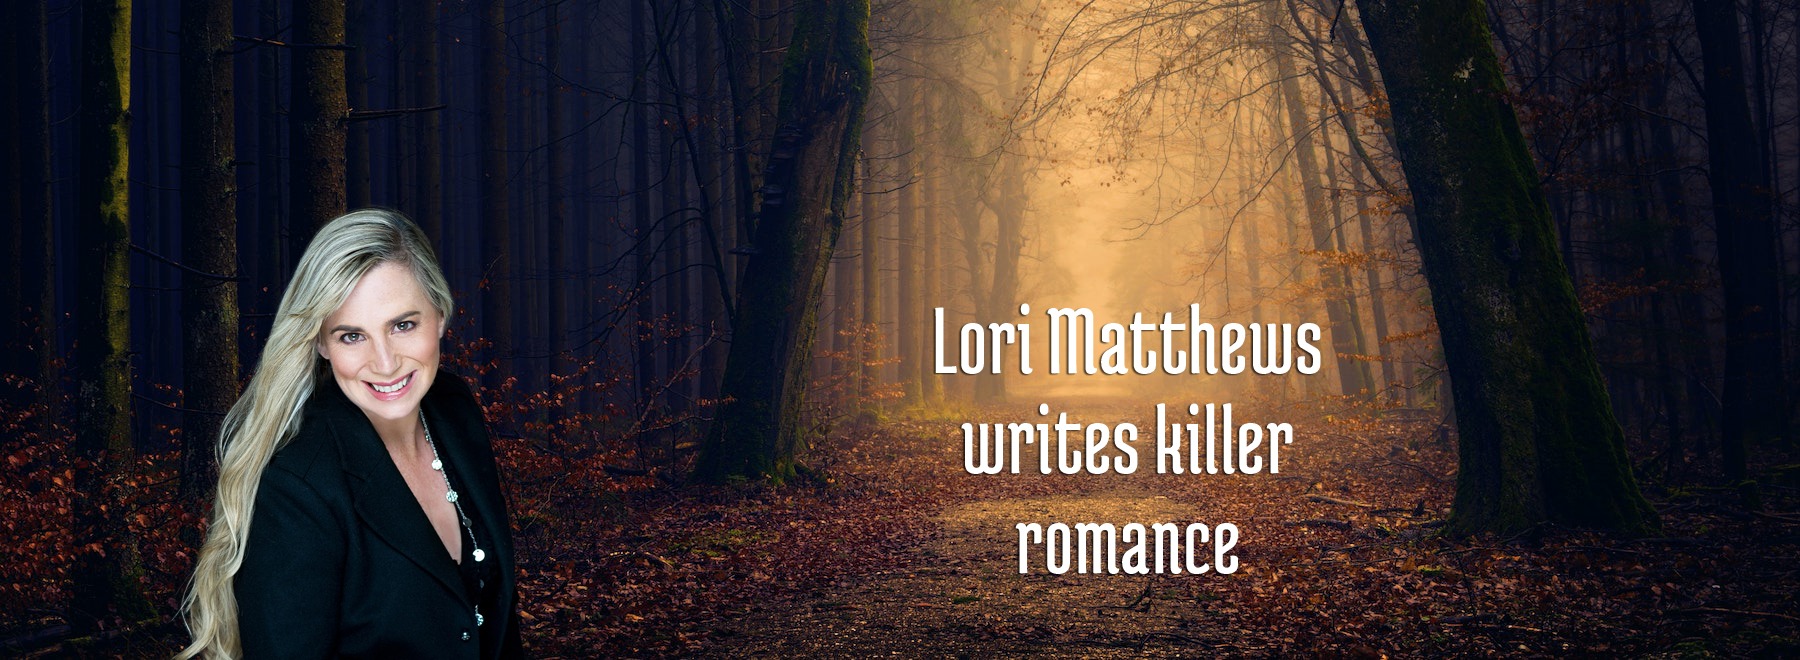 Lori Matthews writes killer romance